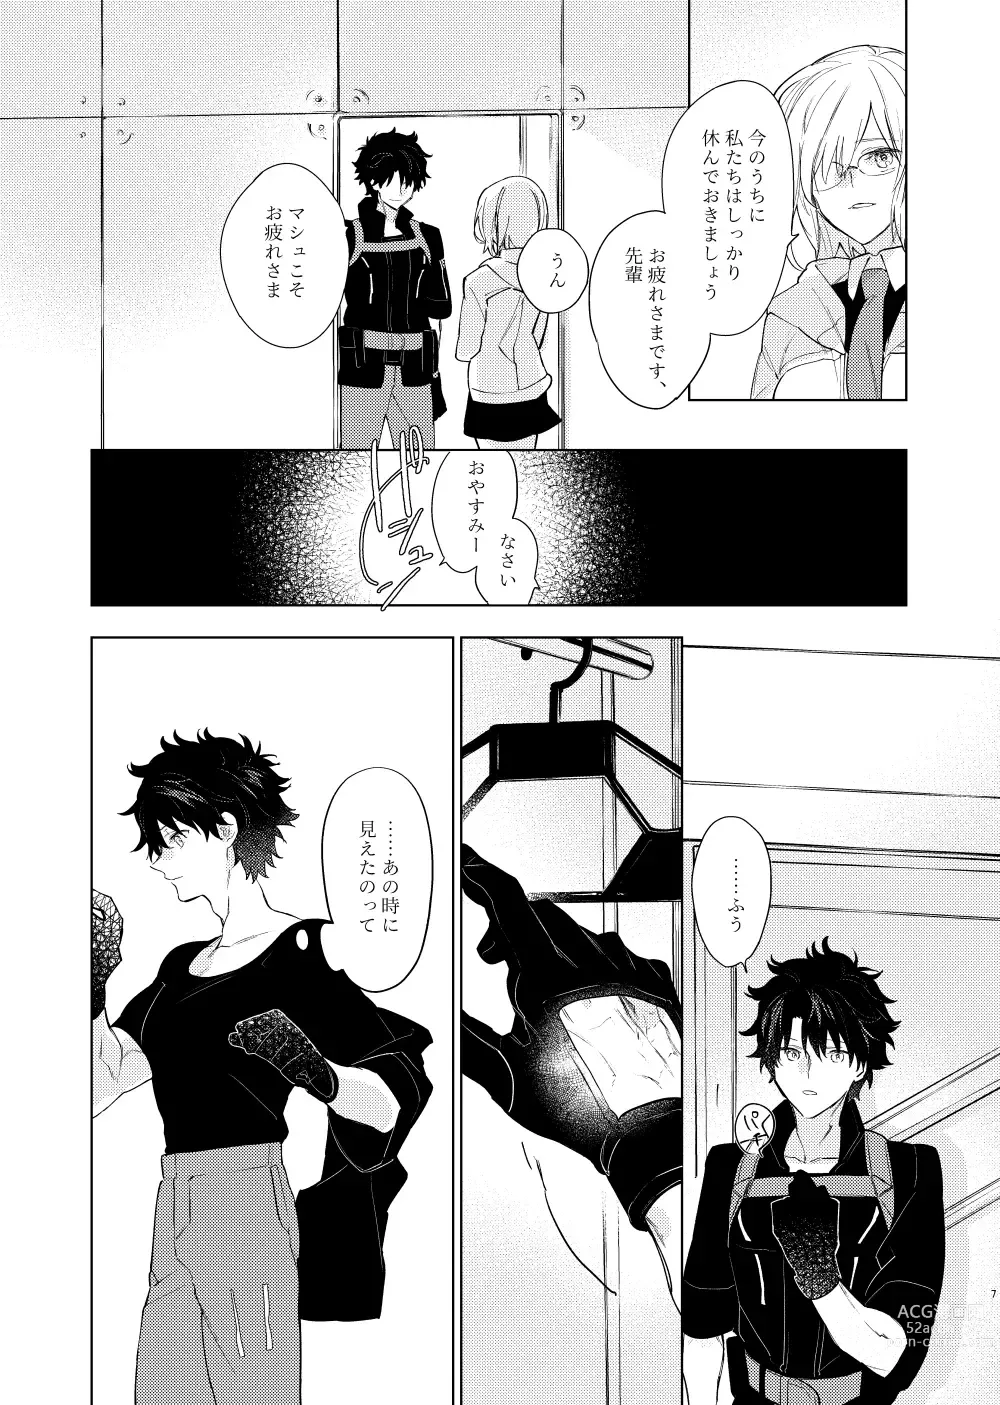 Page 6 of doujinshi Kagerou no Ko